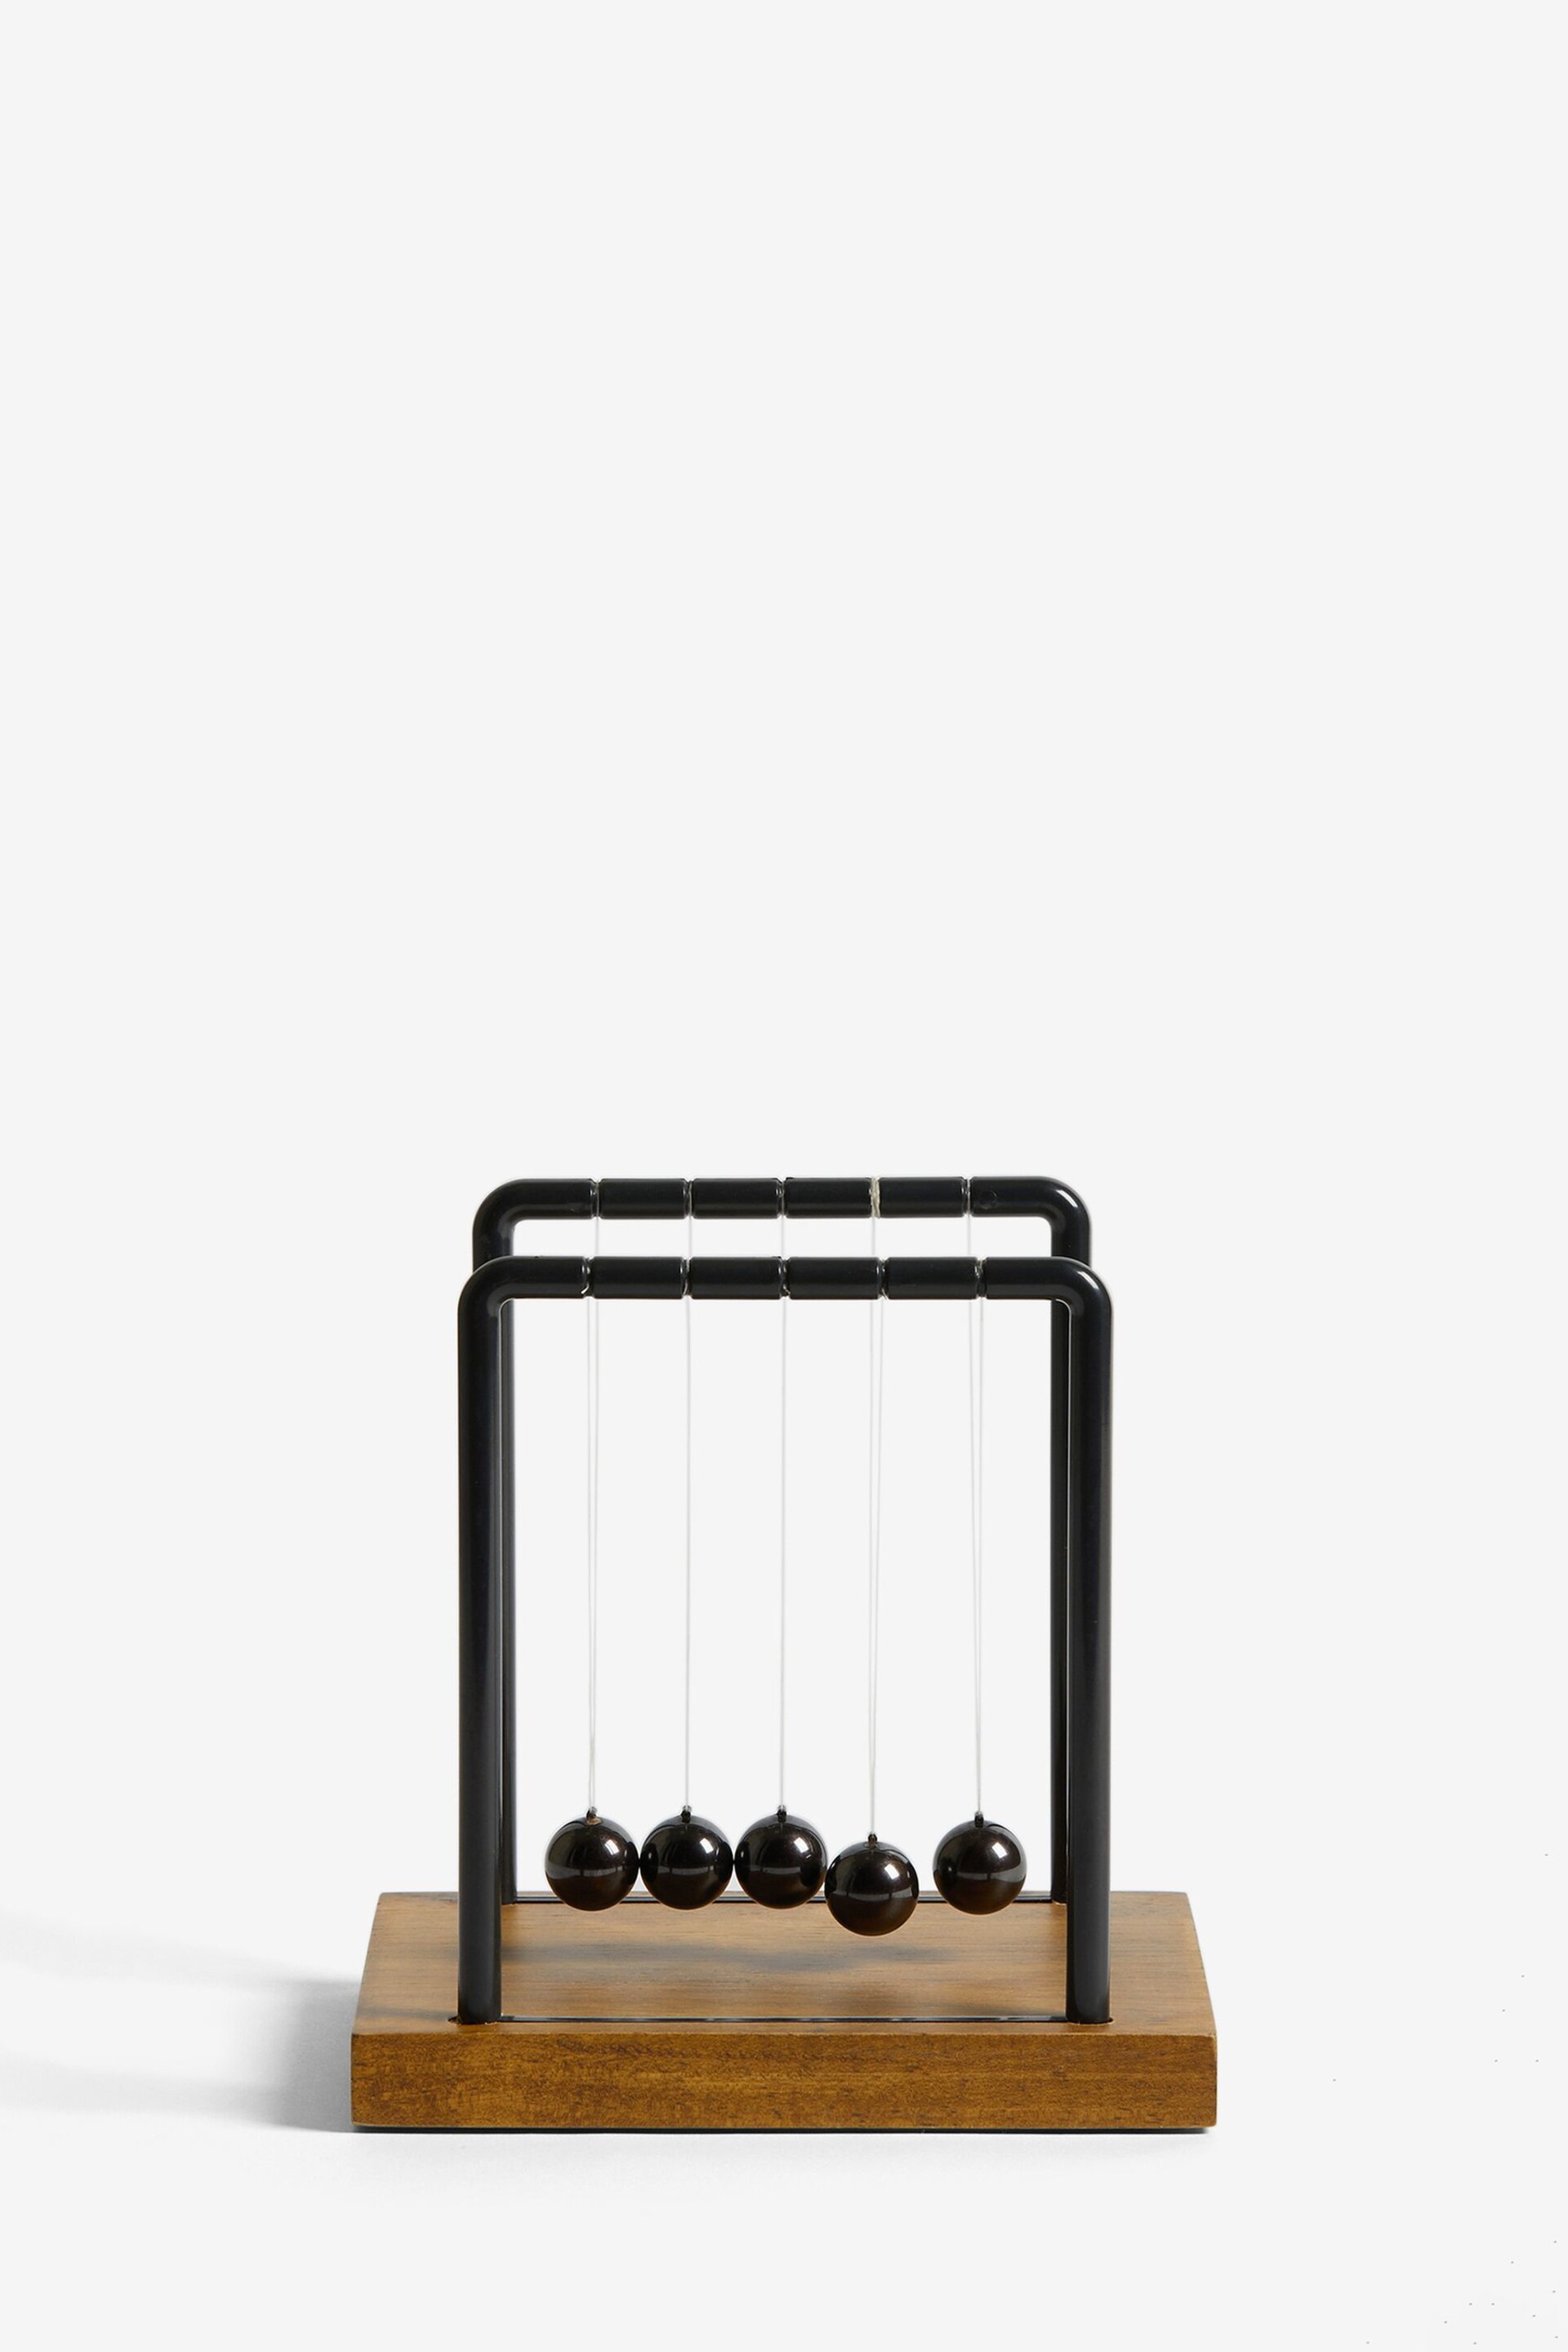 Black Wooden Decorative Newton's Cradle Balance Ball Ornament - Image 3 of 4